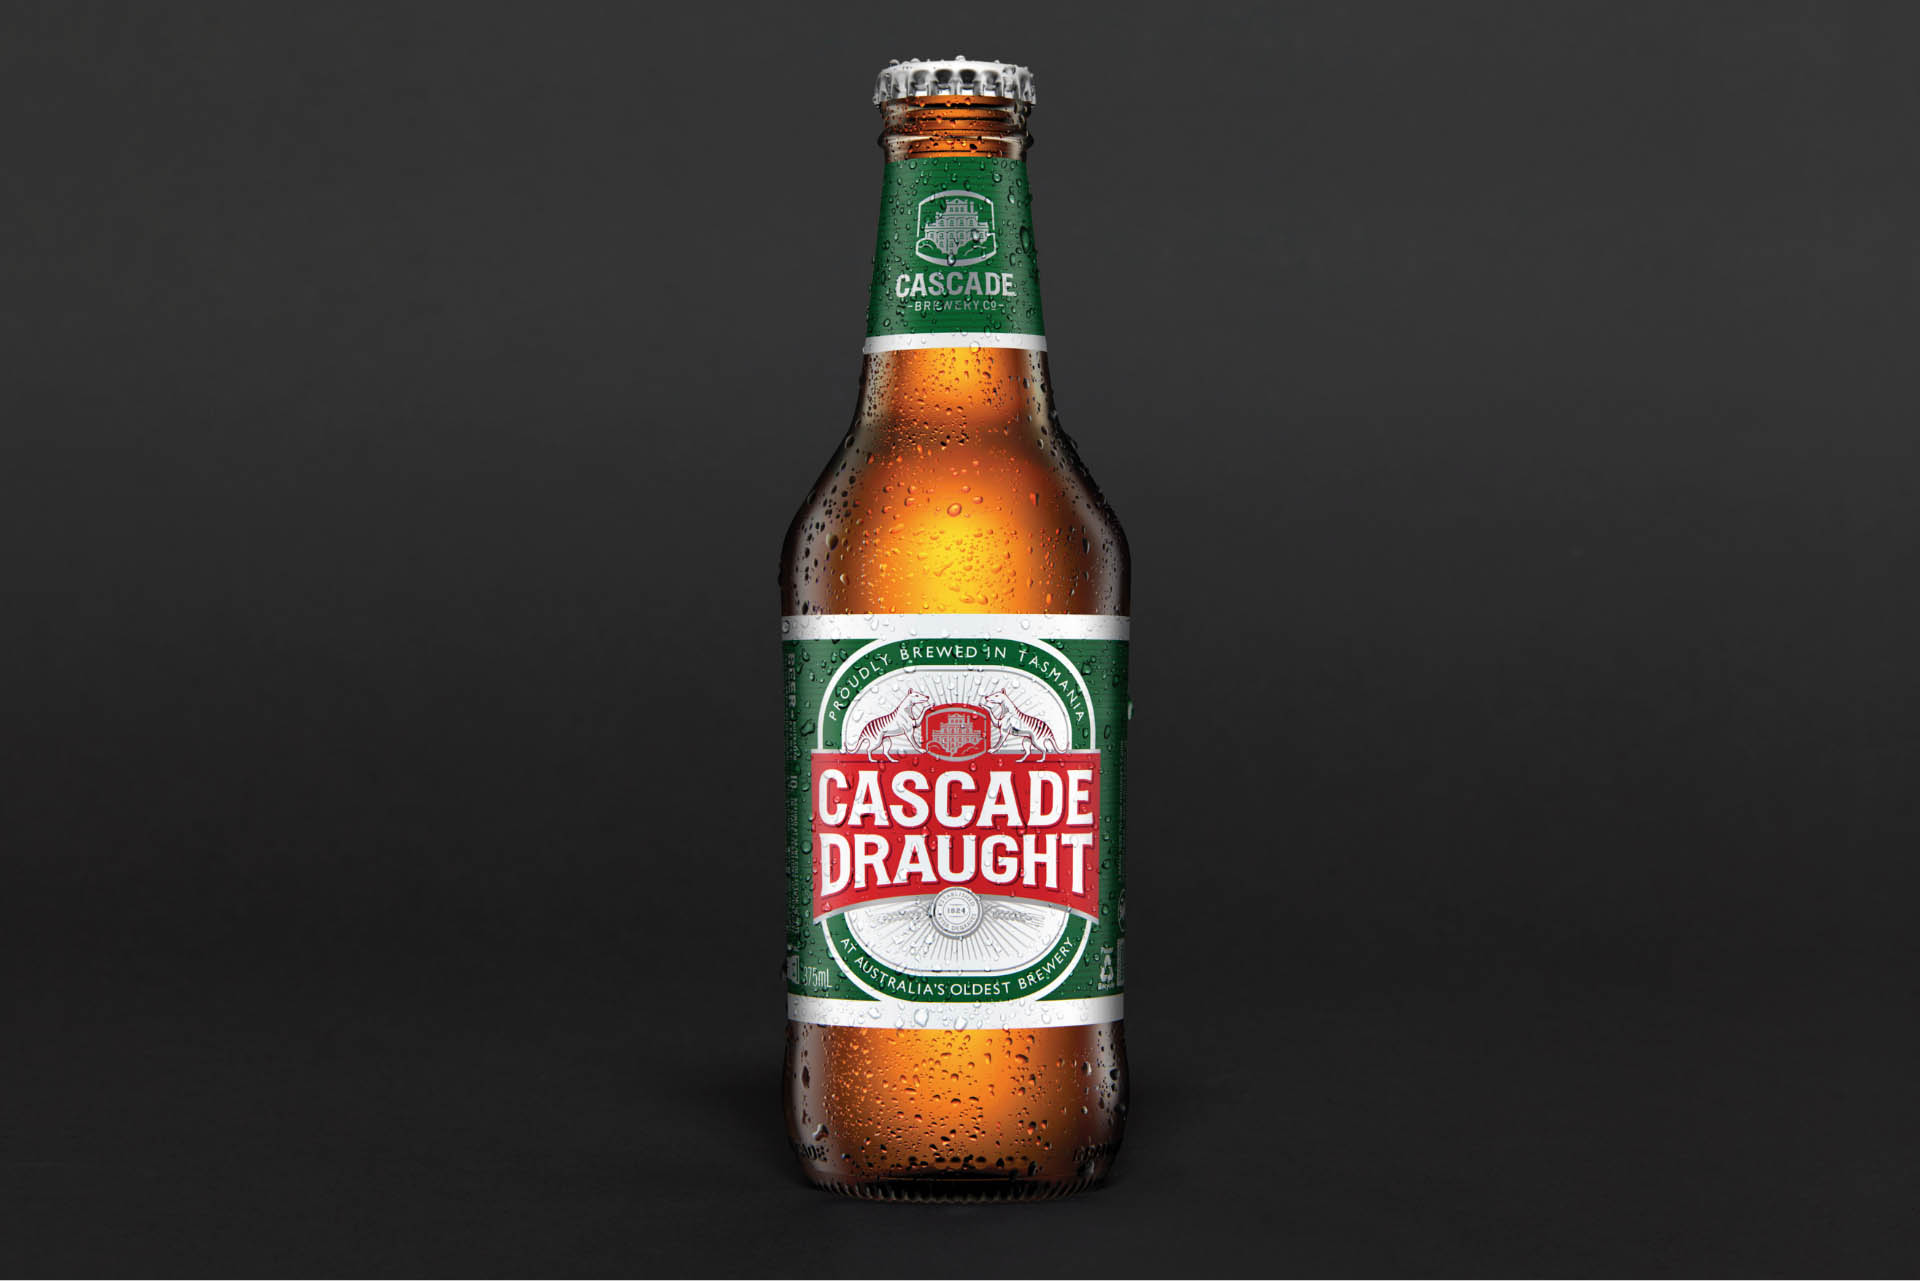 Cascade-carousel 1 B